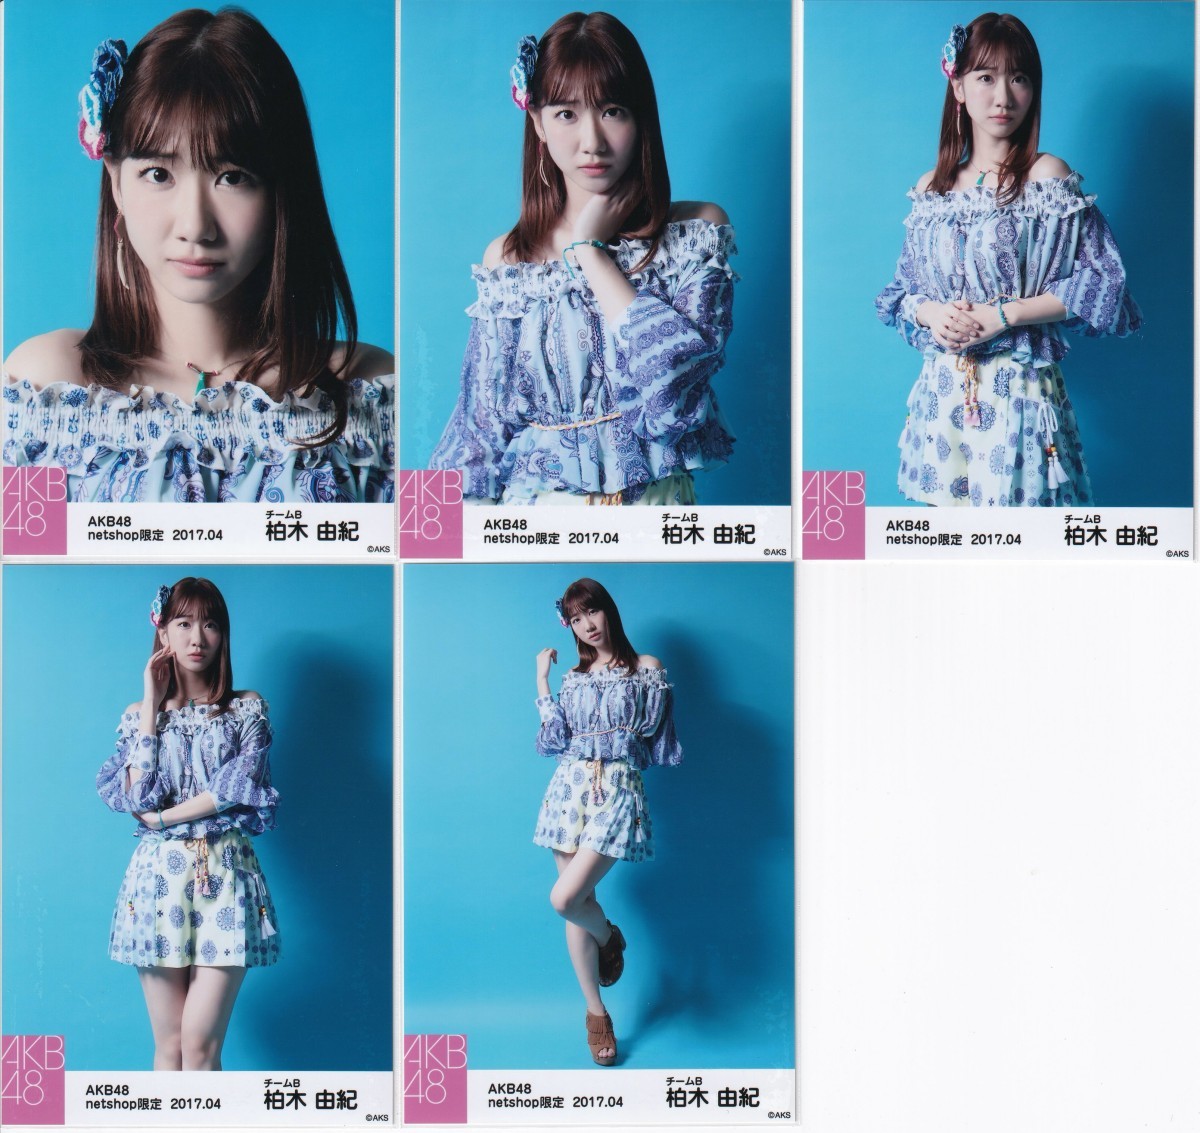 AKB48 Kashiwagi Yuki netshop limitation 2017.04 individual life photograph 5 kind comp wing is not ethnic pattern costume 